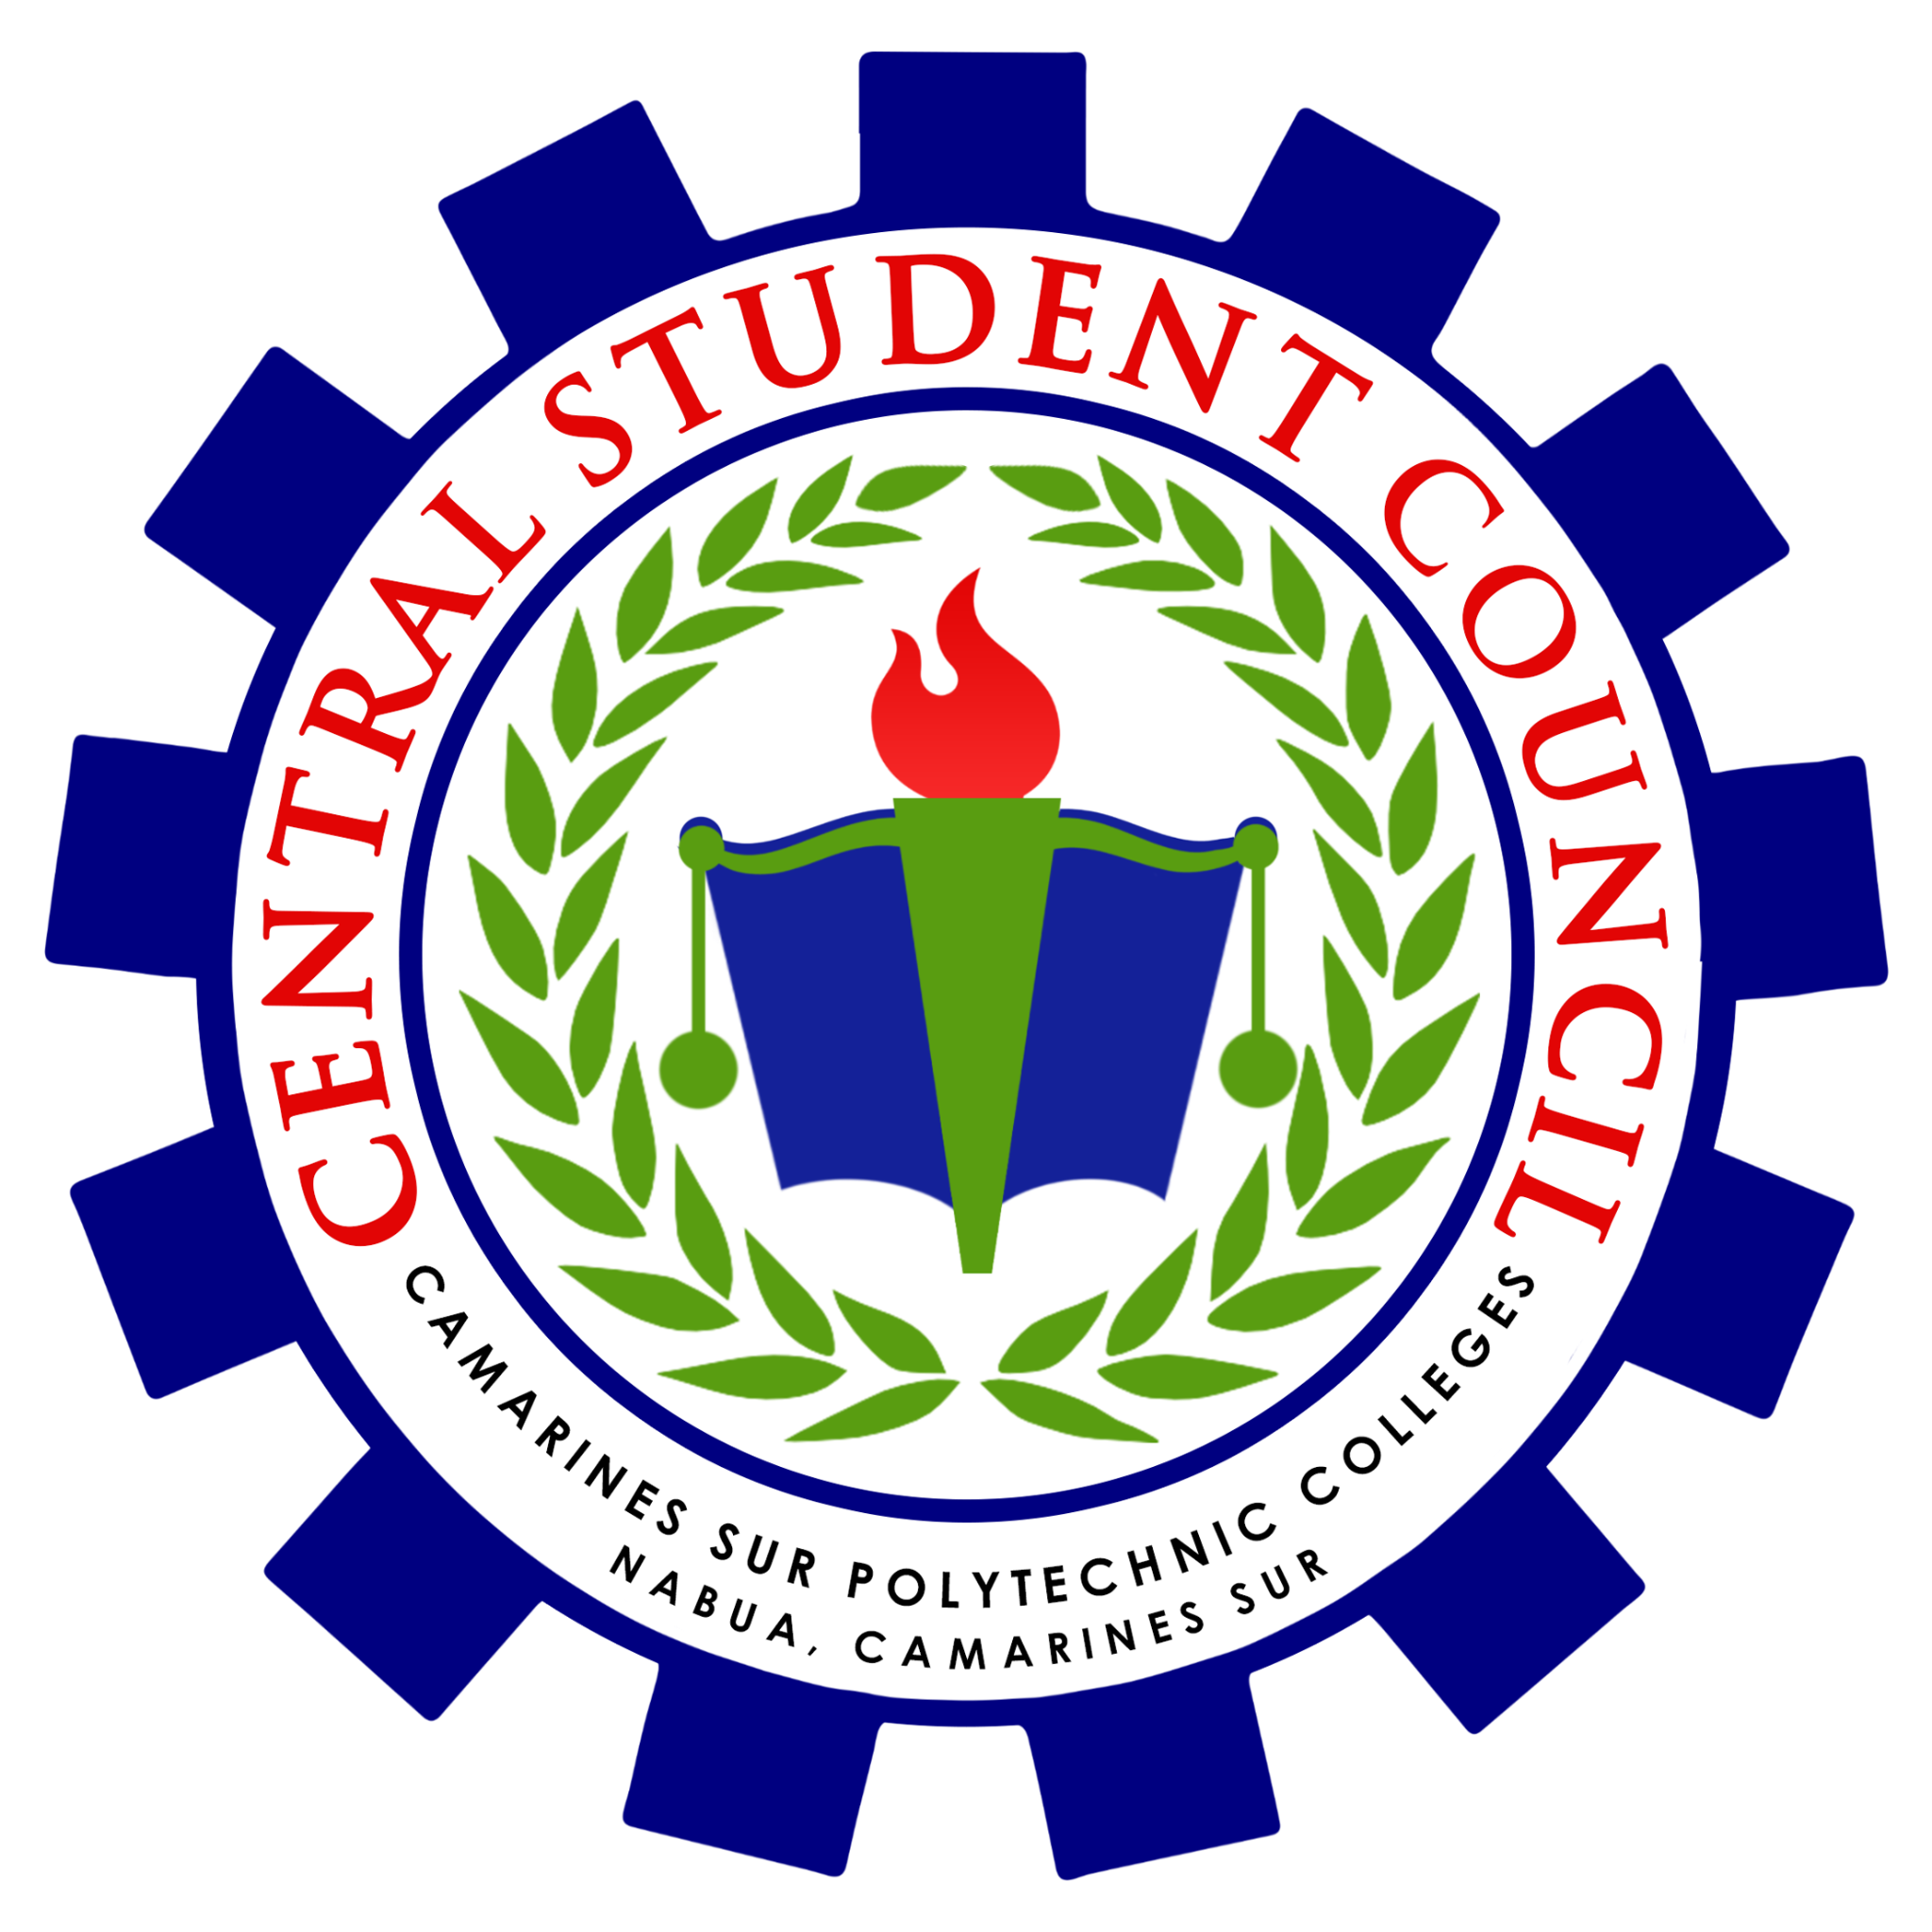 CSPC - Central Student Council Inc.